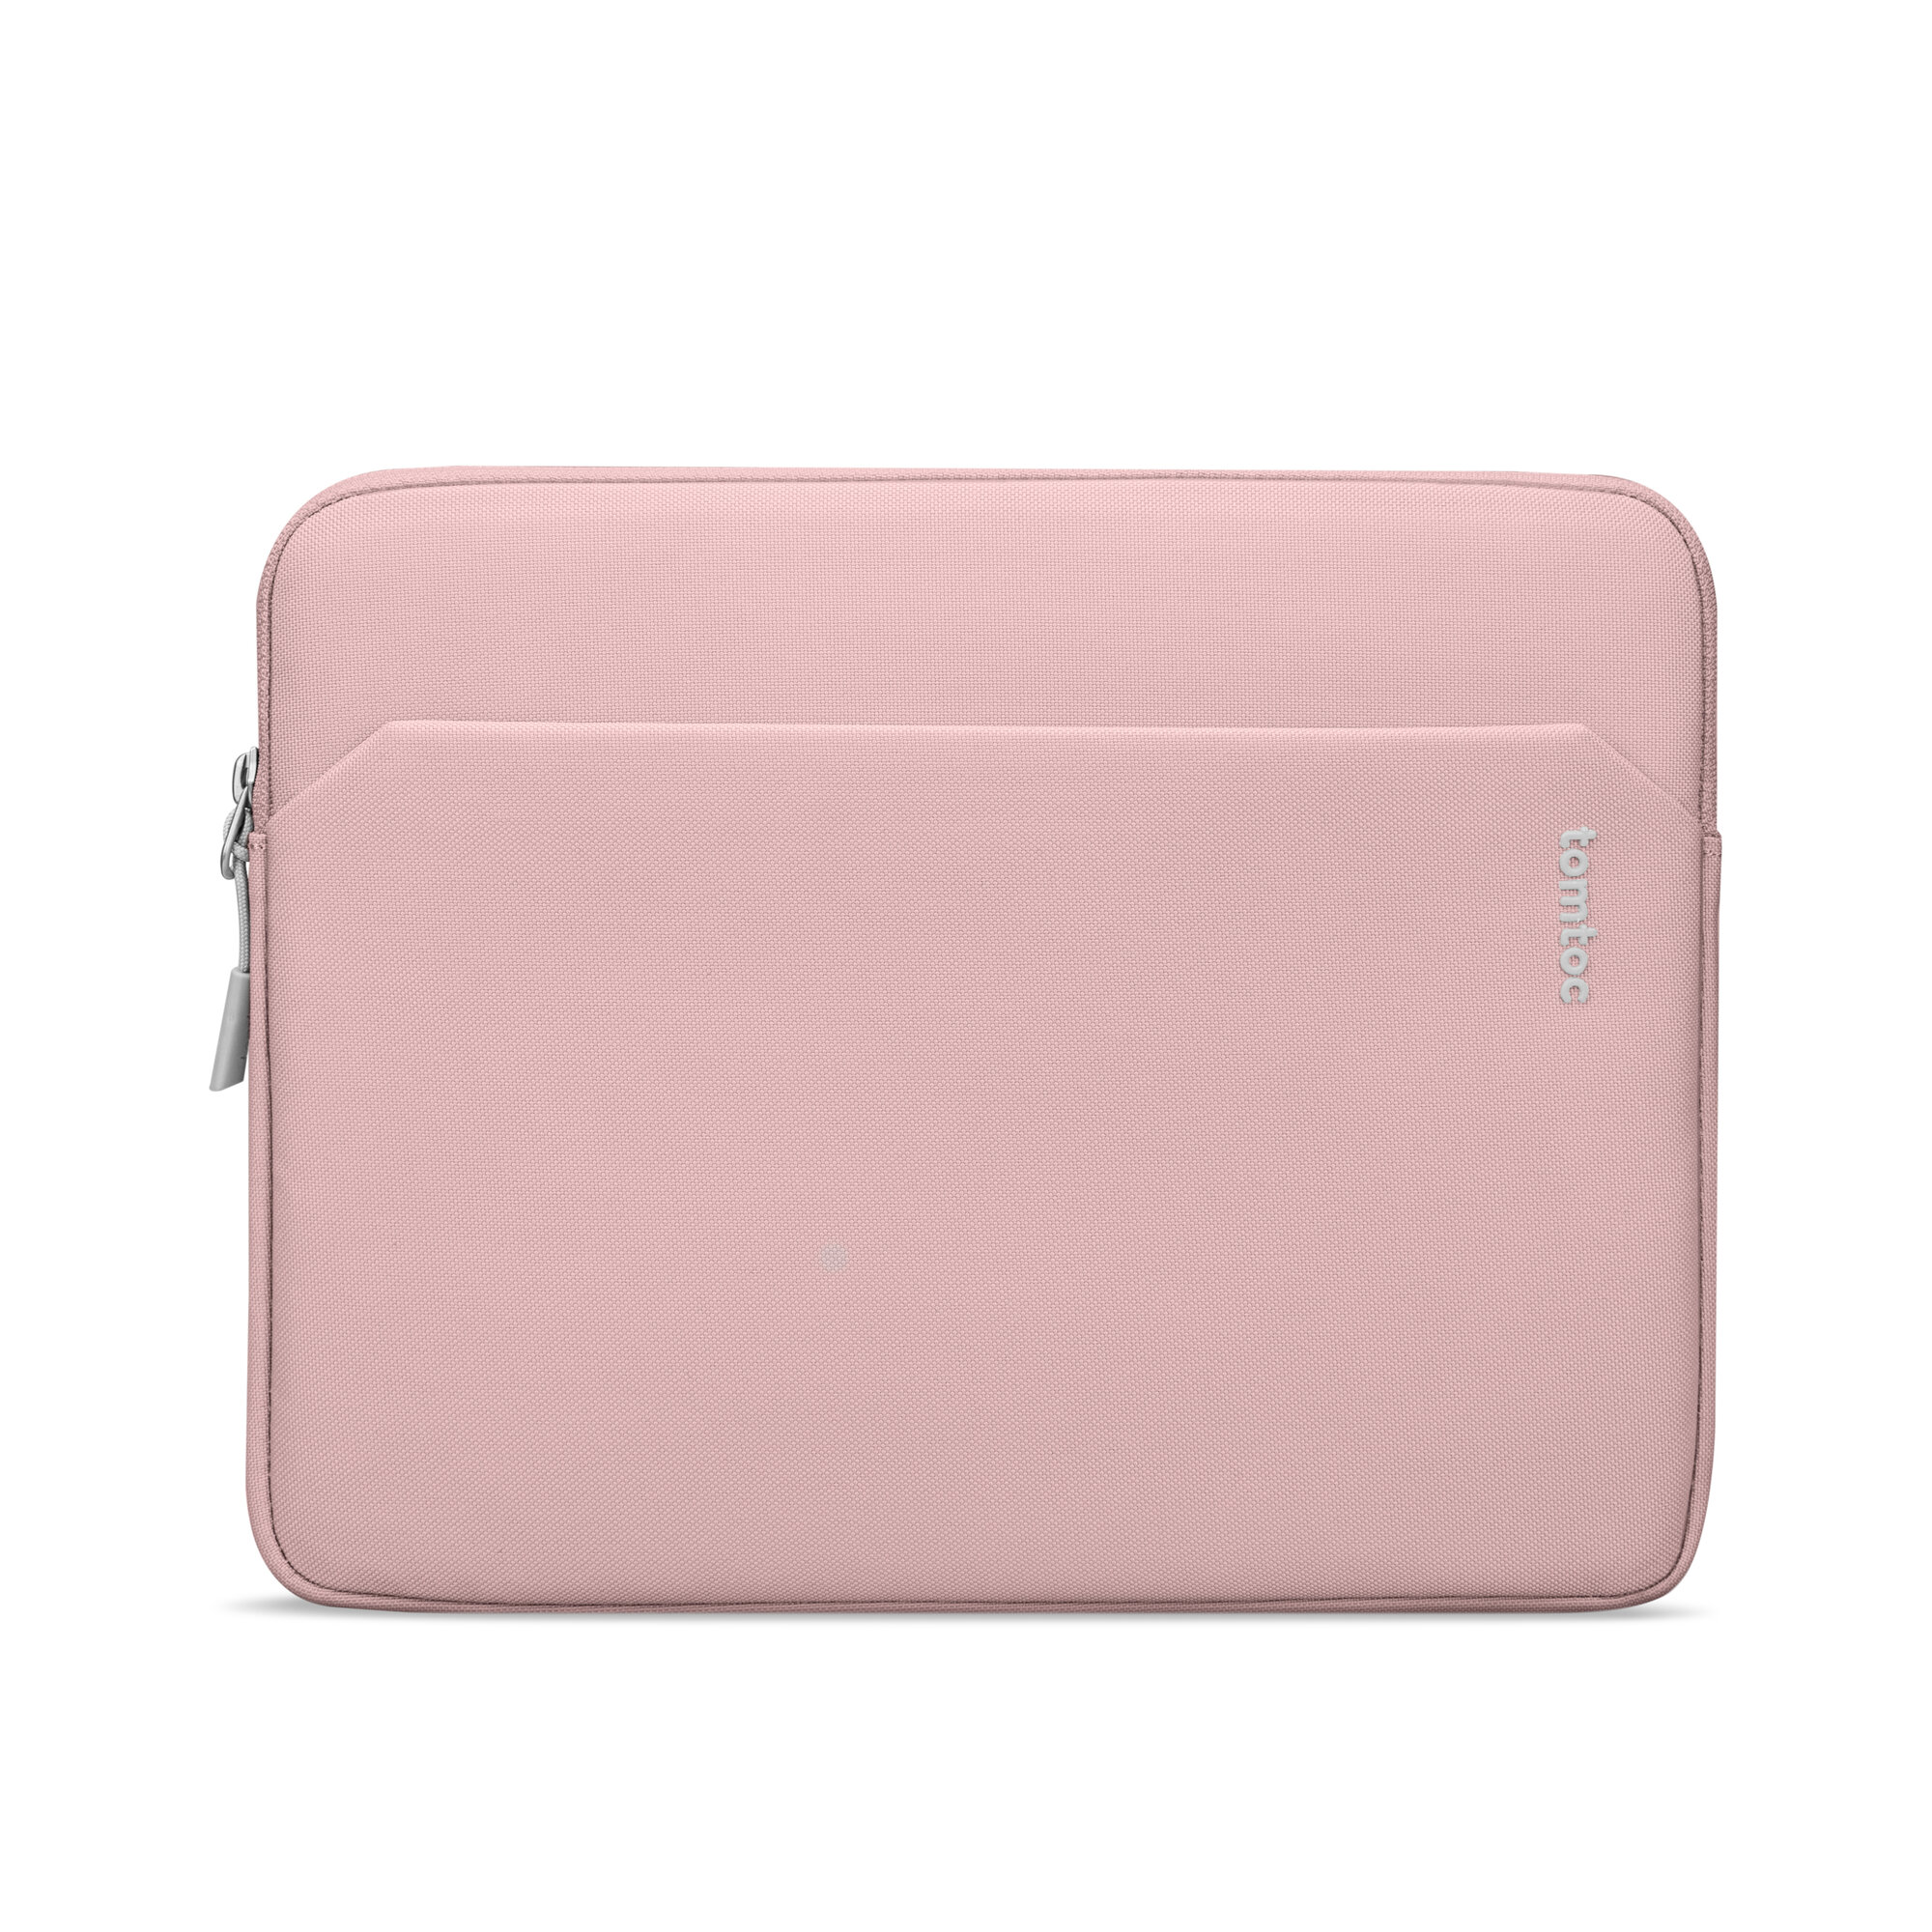 Tomtoc для планшетов 9.7-11 чехол Classic Tablet Sleeve A18 Baby pink